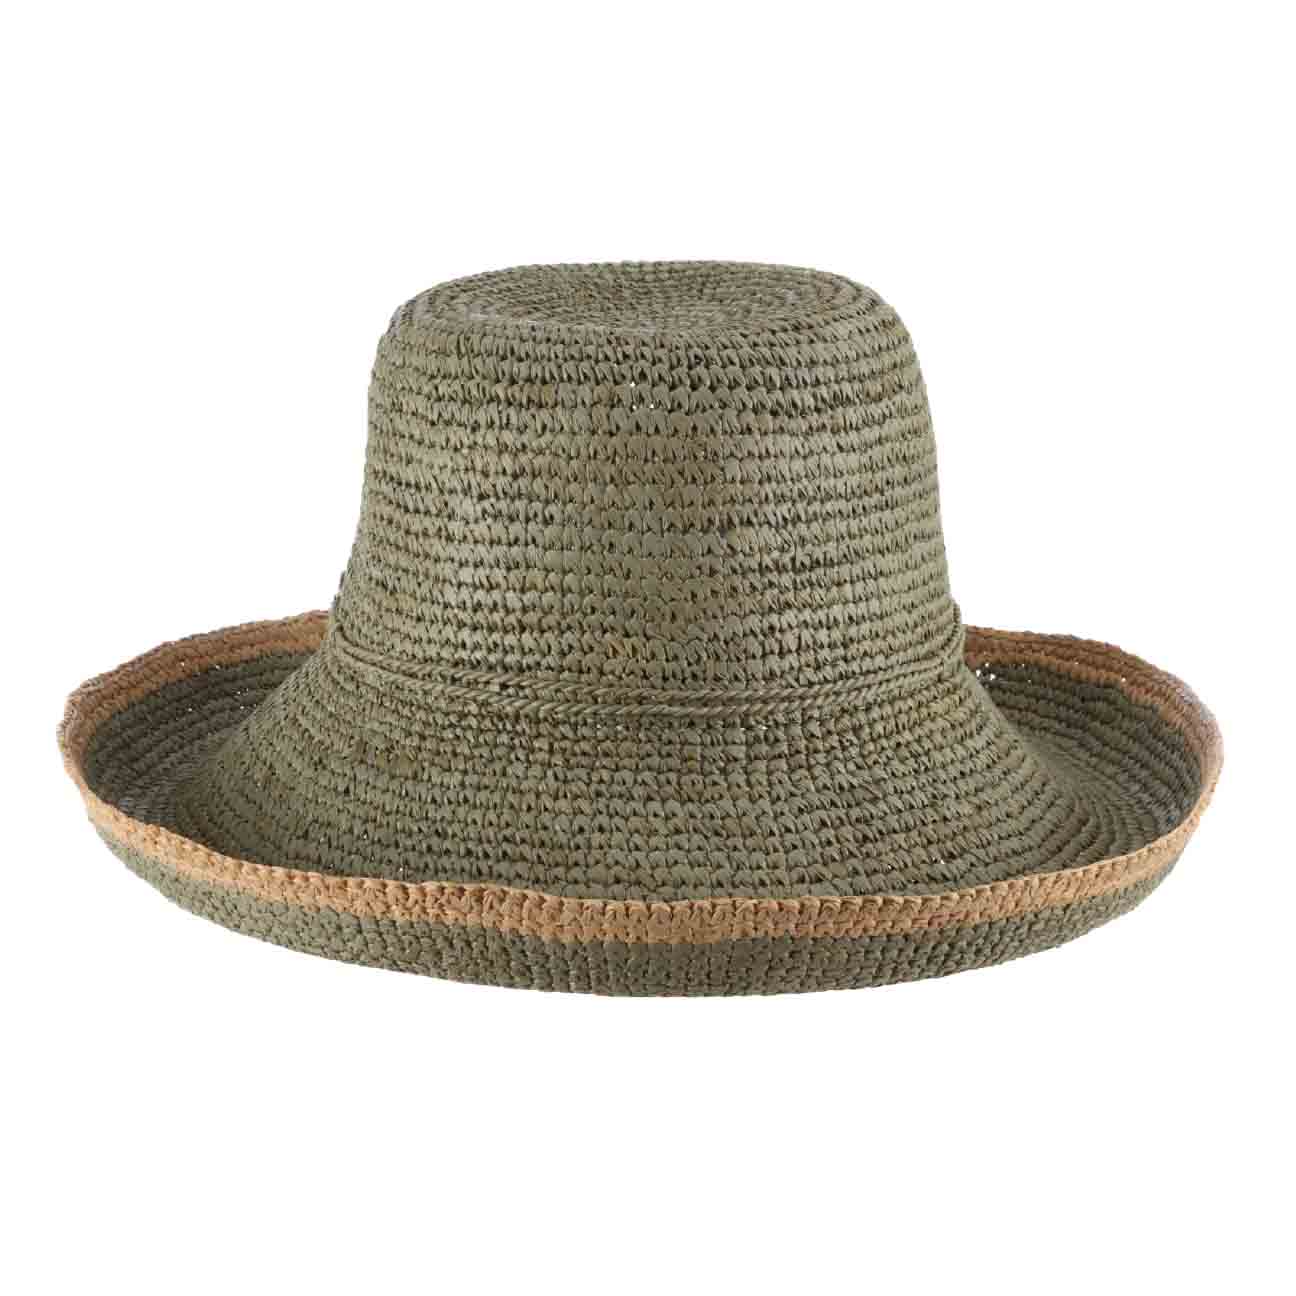 Sage Crocheted Raffia Kettle Brim Hat - Scala Hats Kettle Brim Hat Scala Hats LR708 Sage OS 